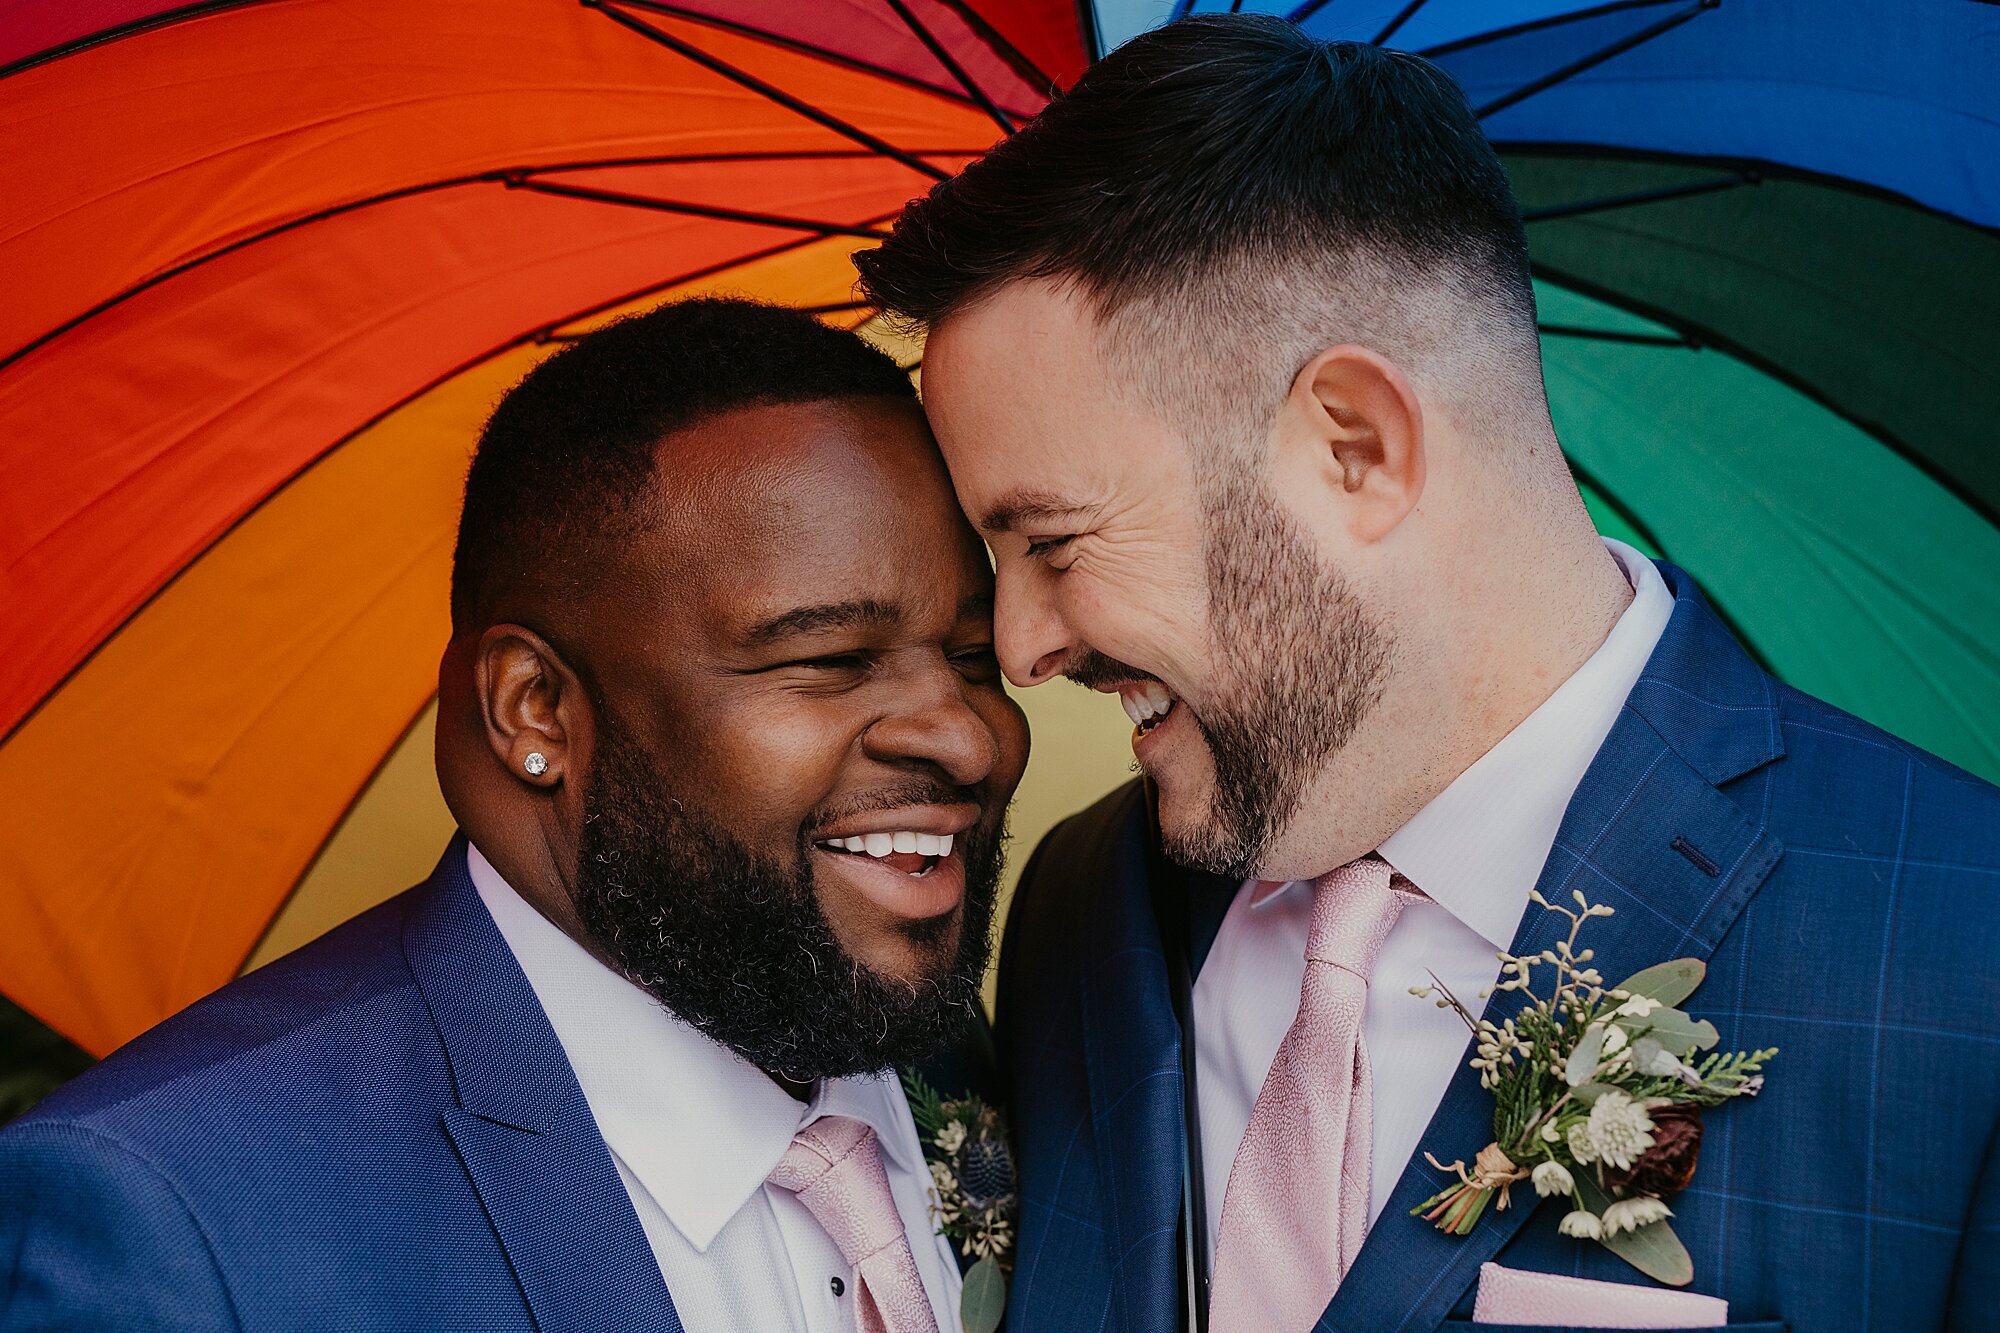 Love_by_Joe_mac_Levering_Mill_Tribute_House_Bala Cynwyd_Gay_LGBT_Wedding_Photography_Philadelphia__0048.jpg